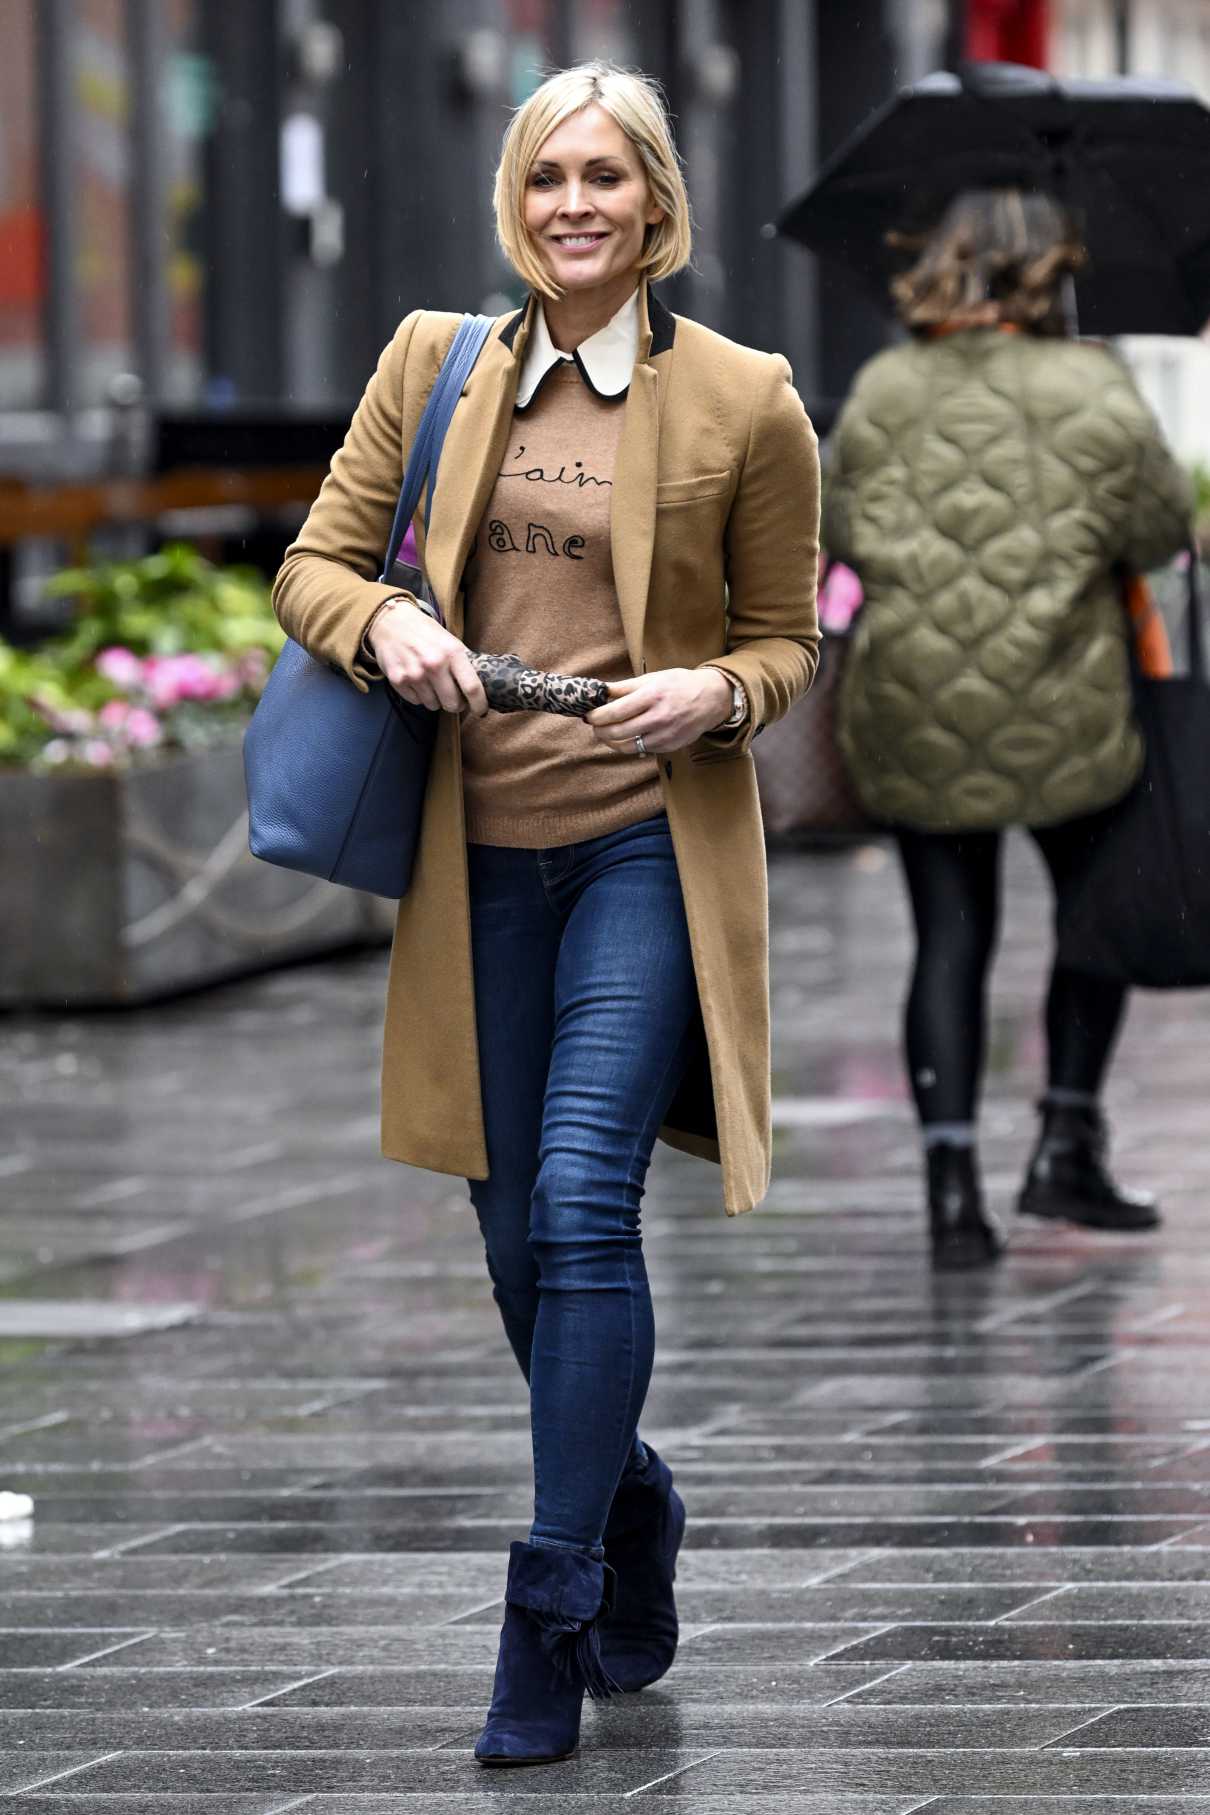 Jenni Falconer in a Caramel Coloured Coat